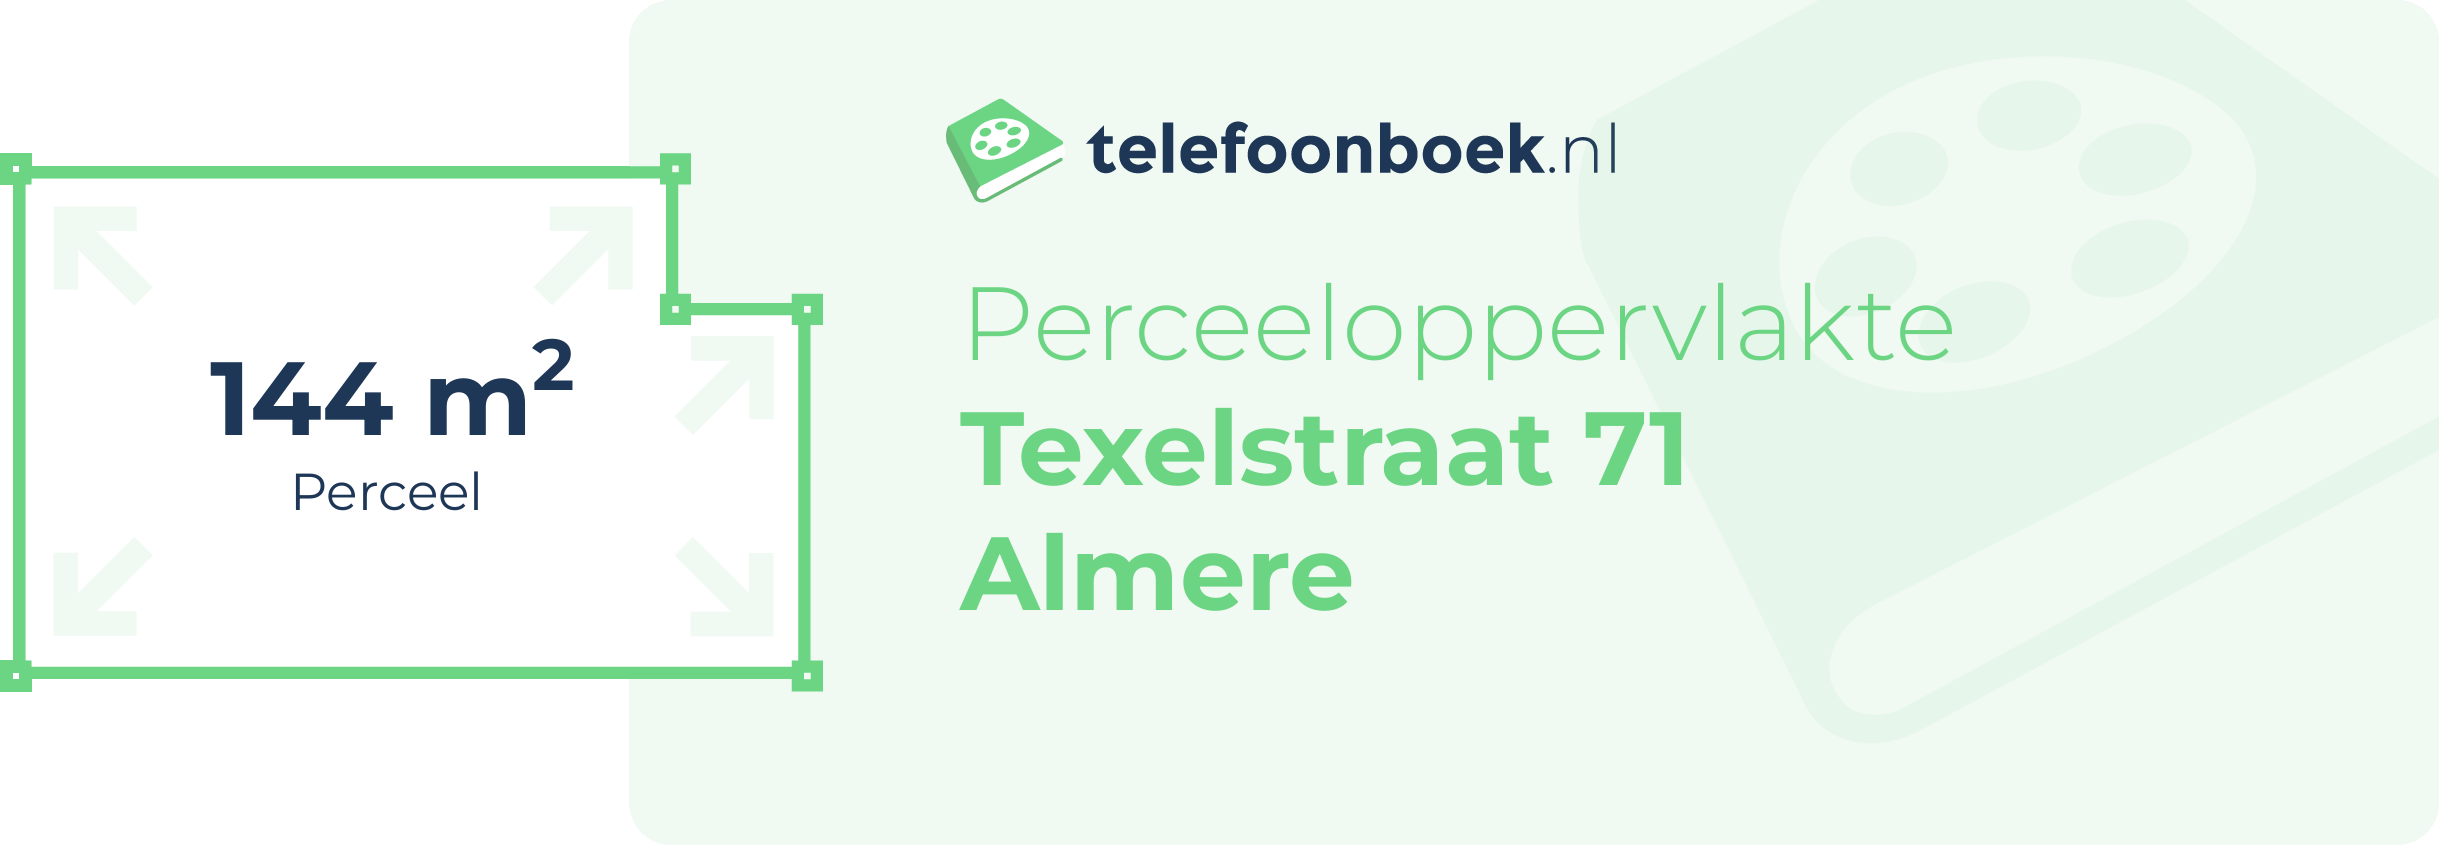 Perceeloppervlakte Texelstraat 71 Almere